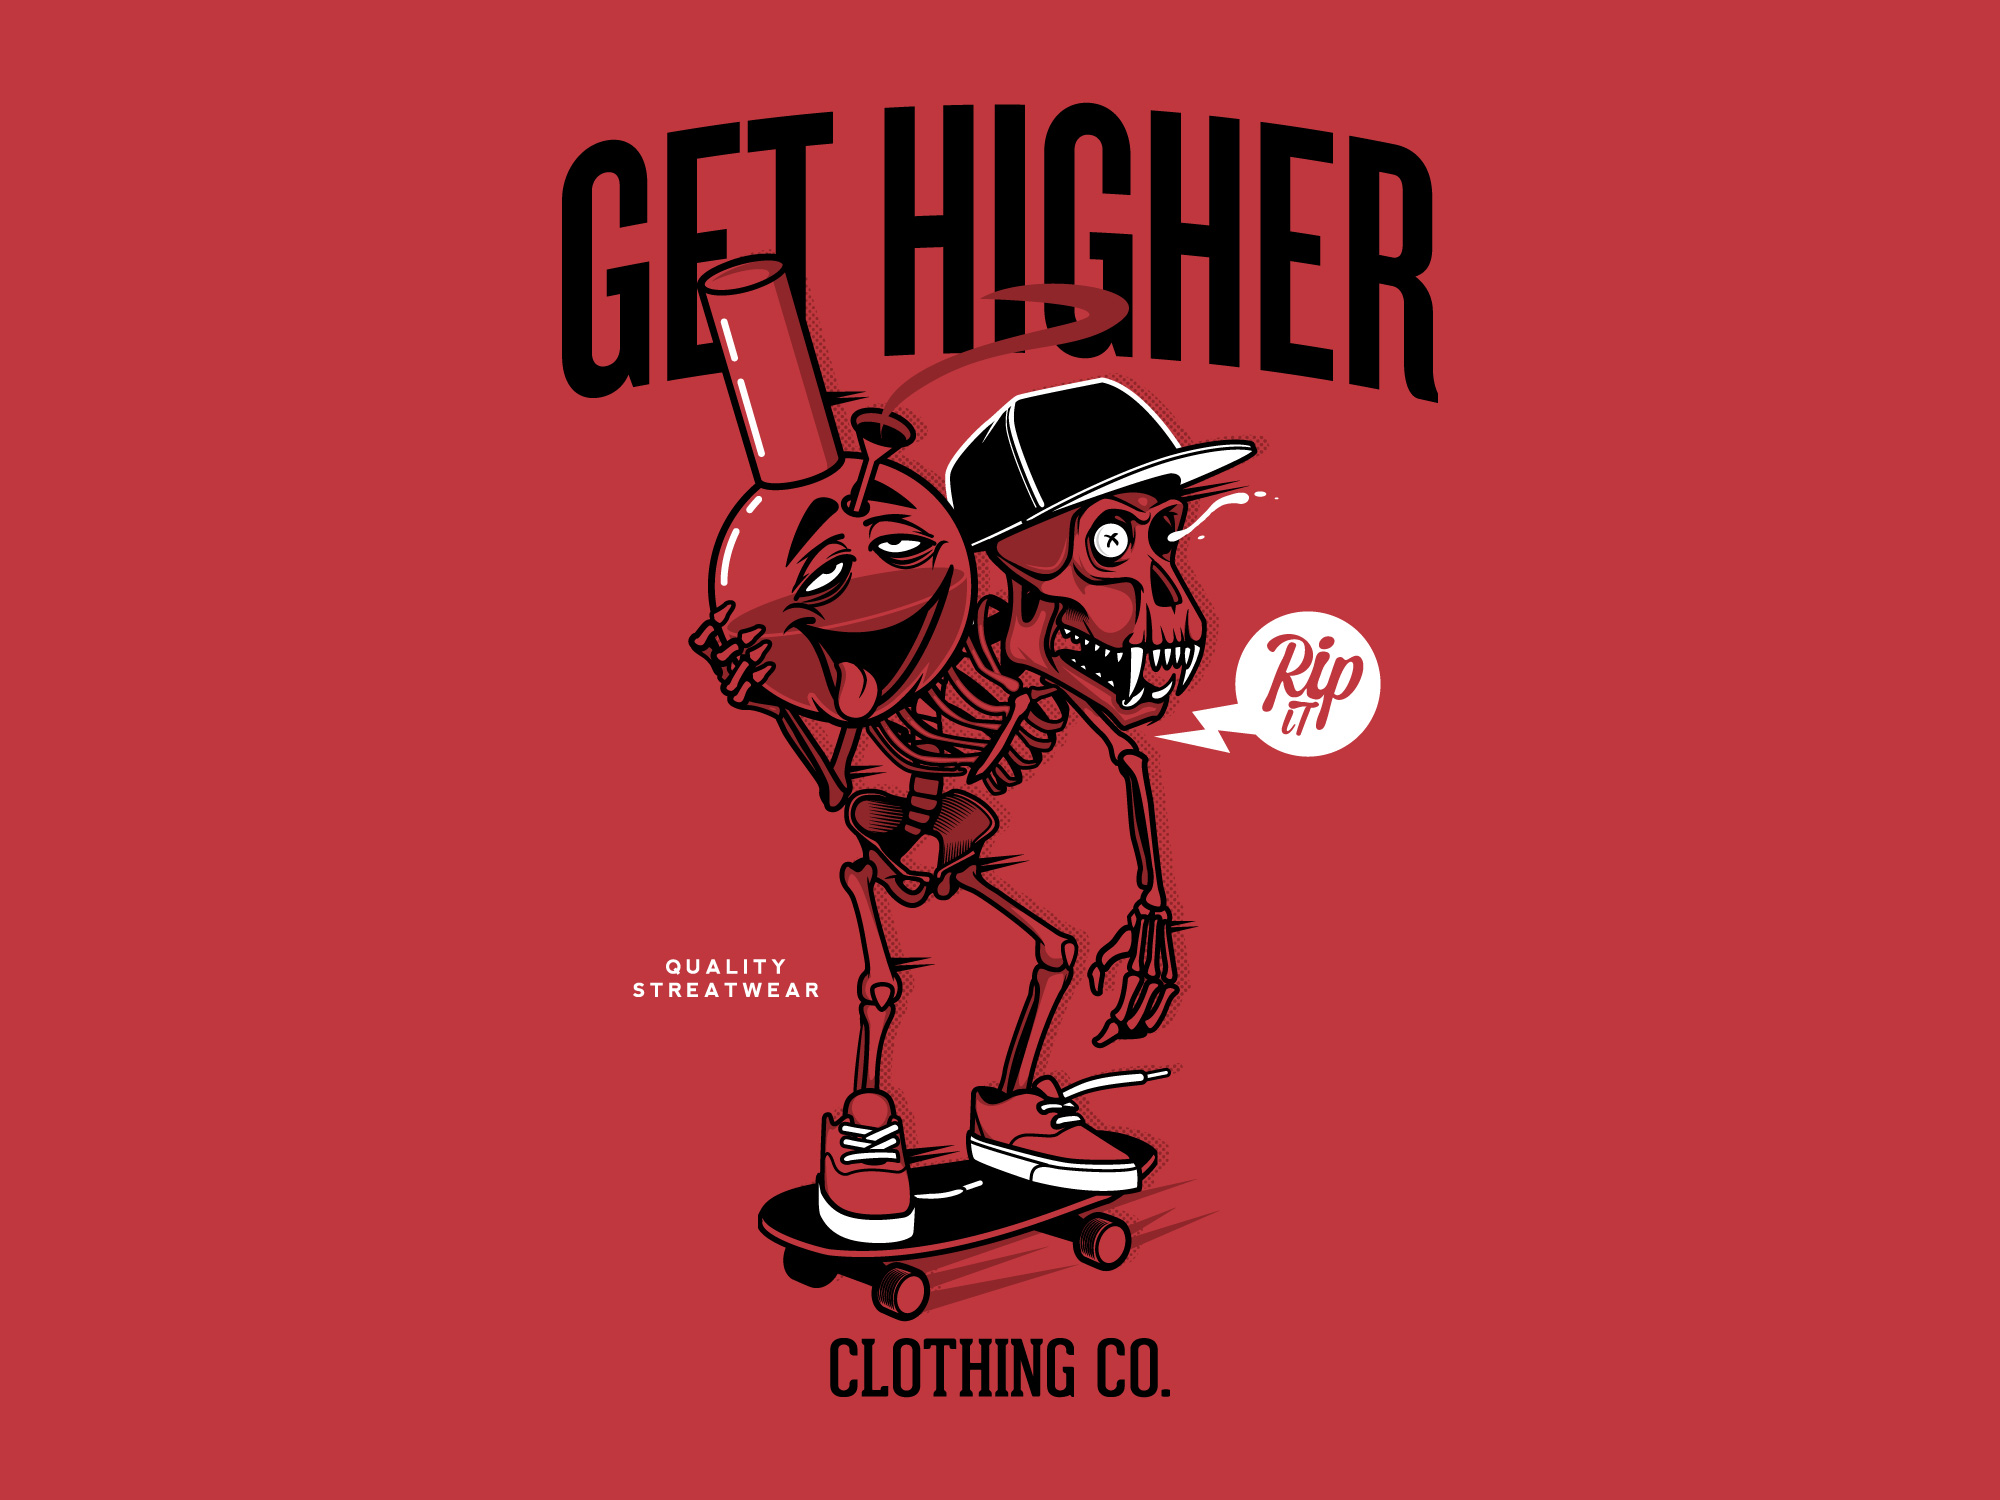 GetHigher-Skeleton-Skateboarder-old-dirty-dermot-creative-for-hire